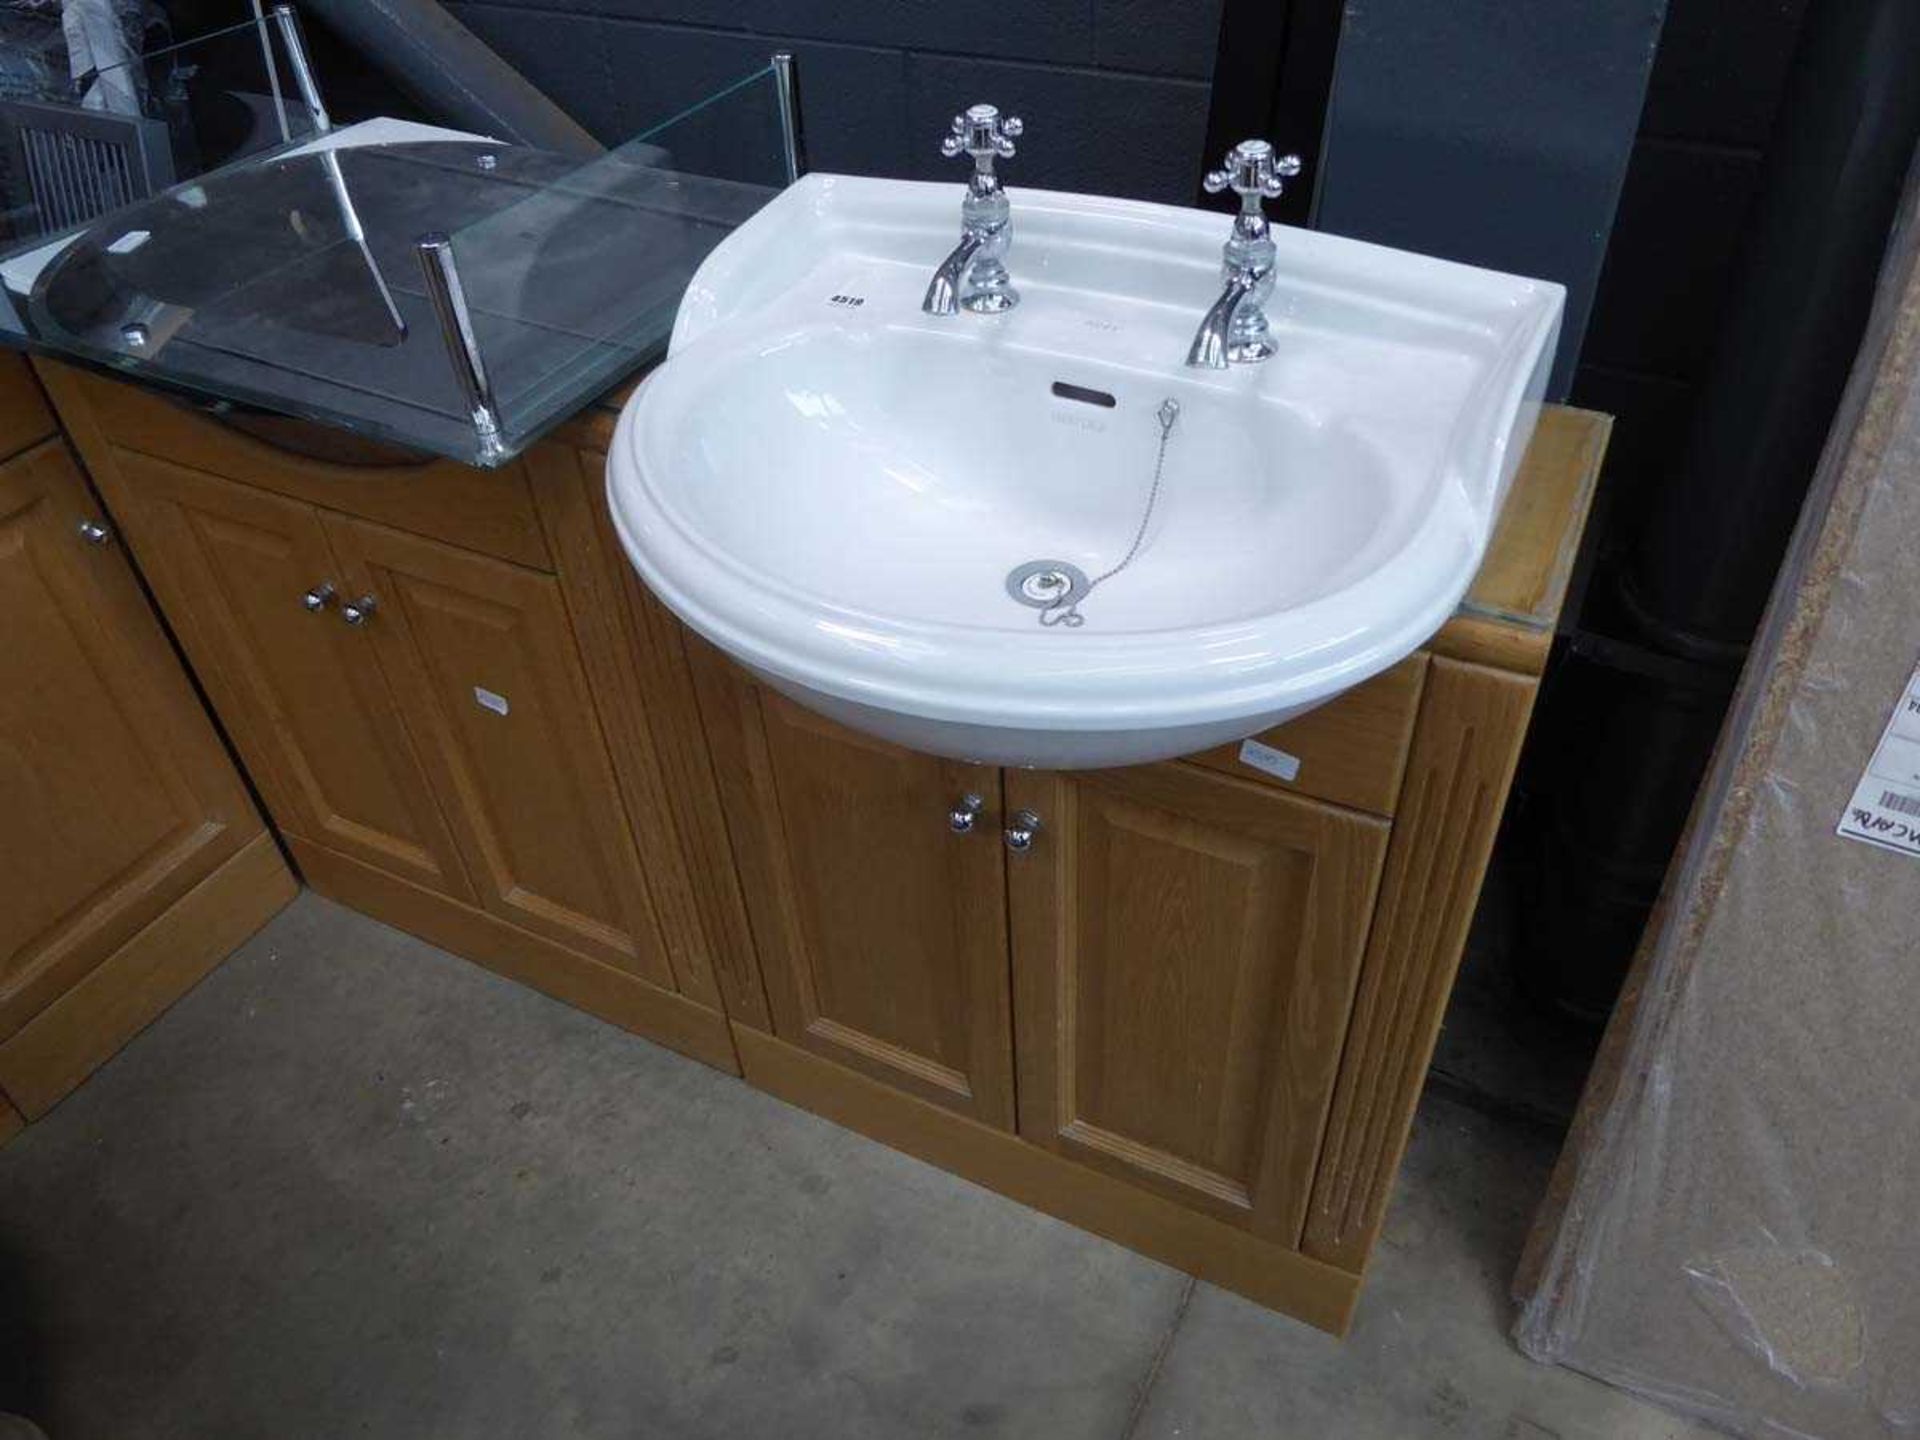 Oak effect bathroom vanity unit with mirror, toilet and sink - Image 2 of 3